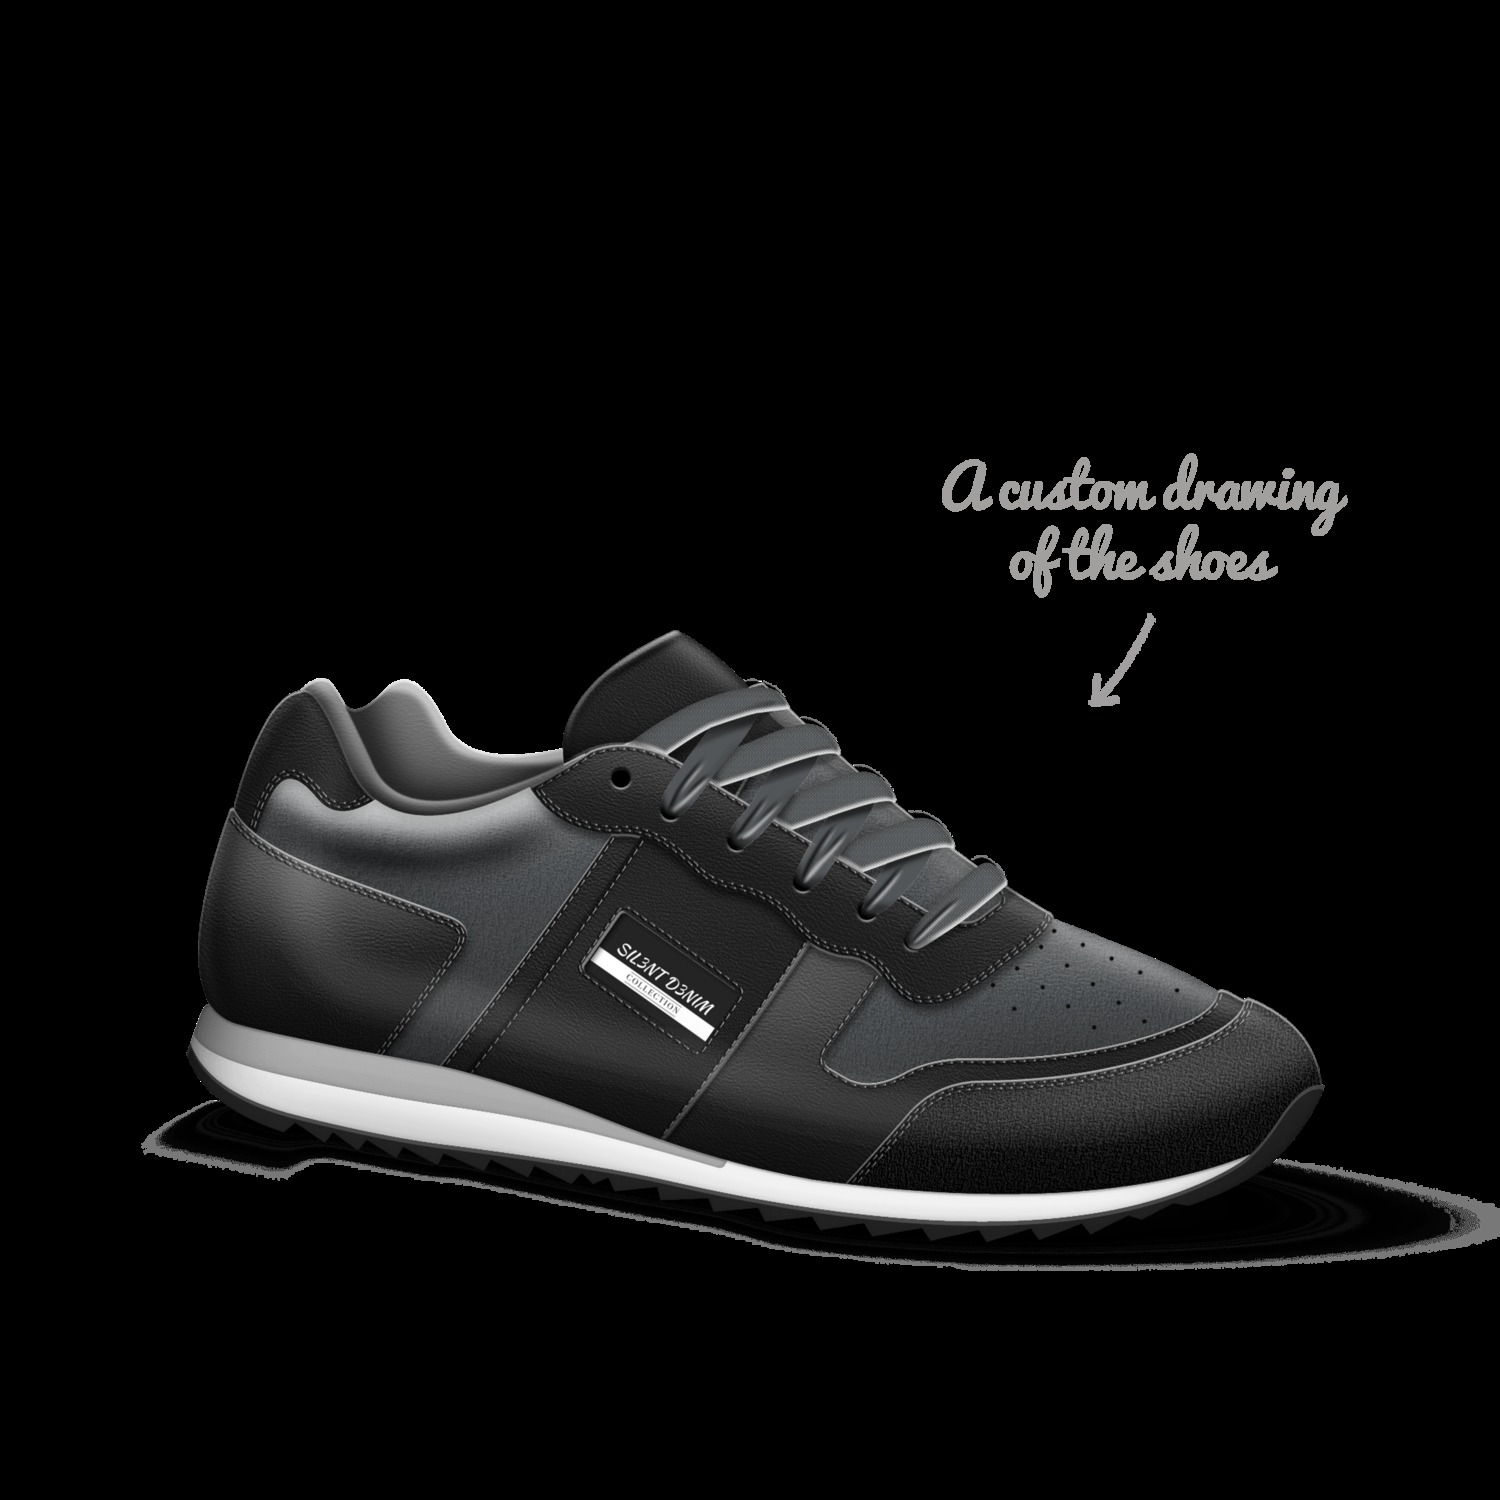 A Custom Shoe concept by Sil3nc3 Seward